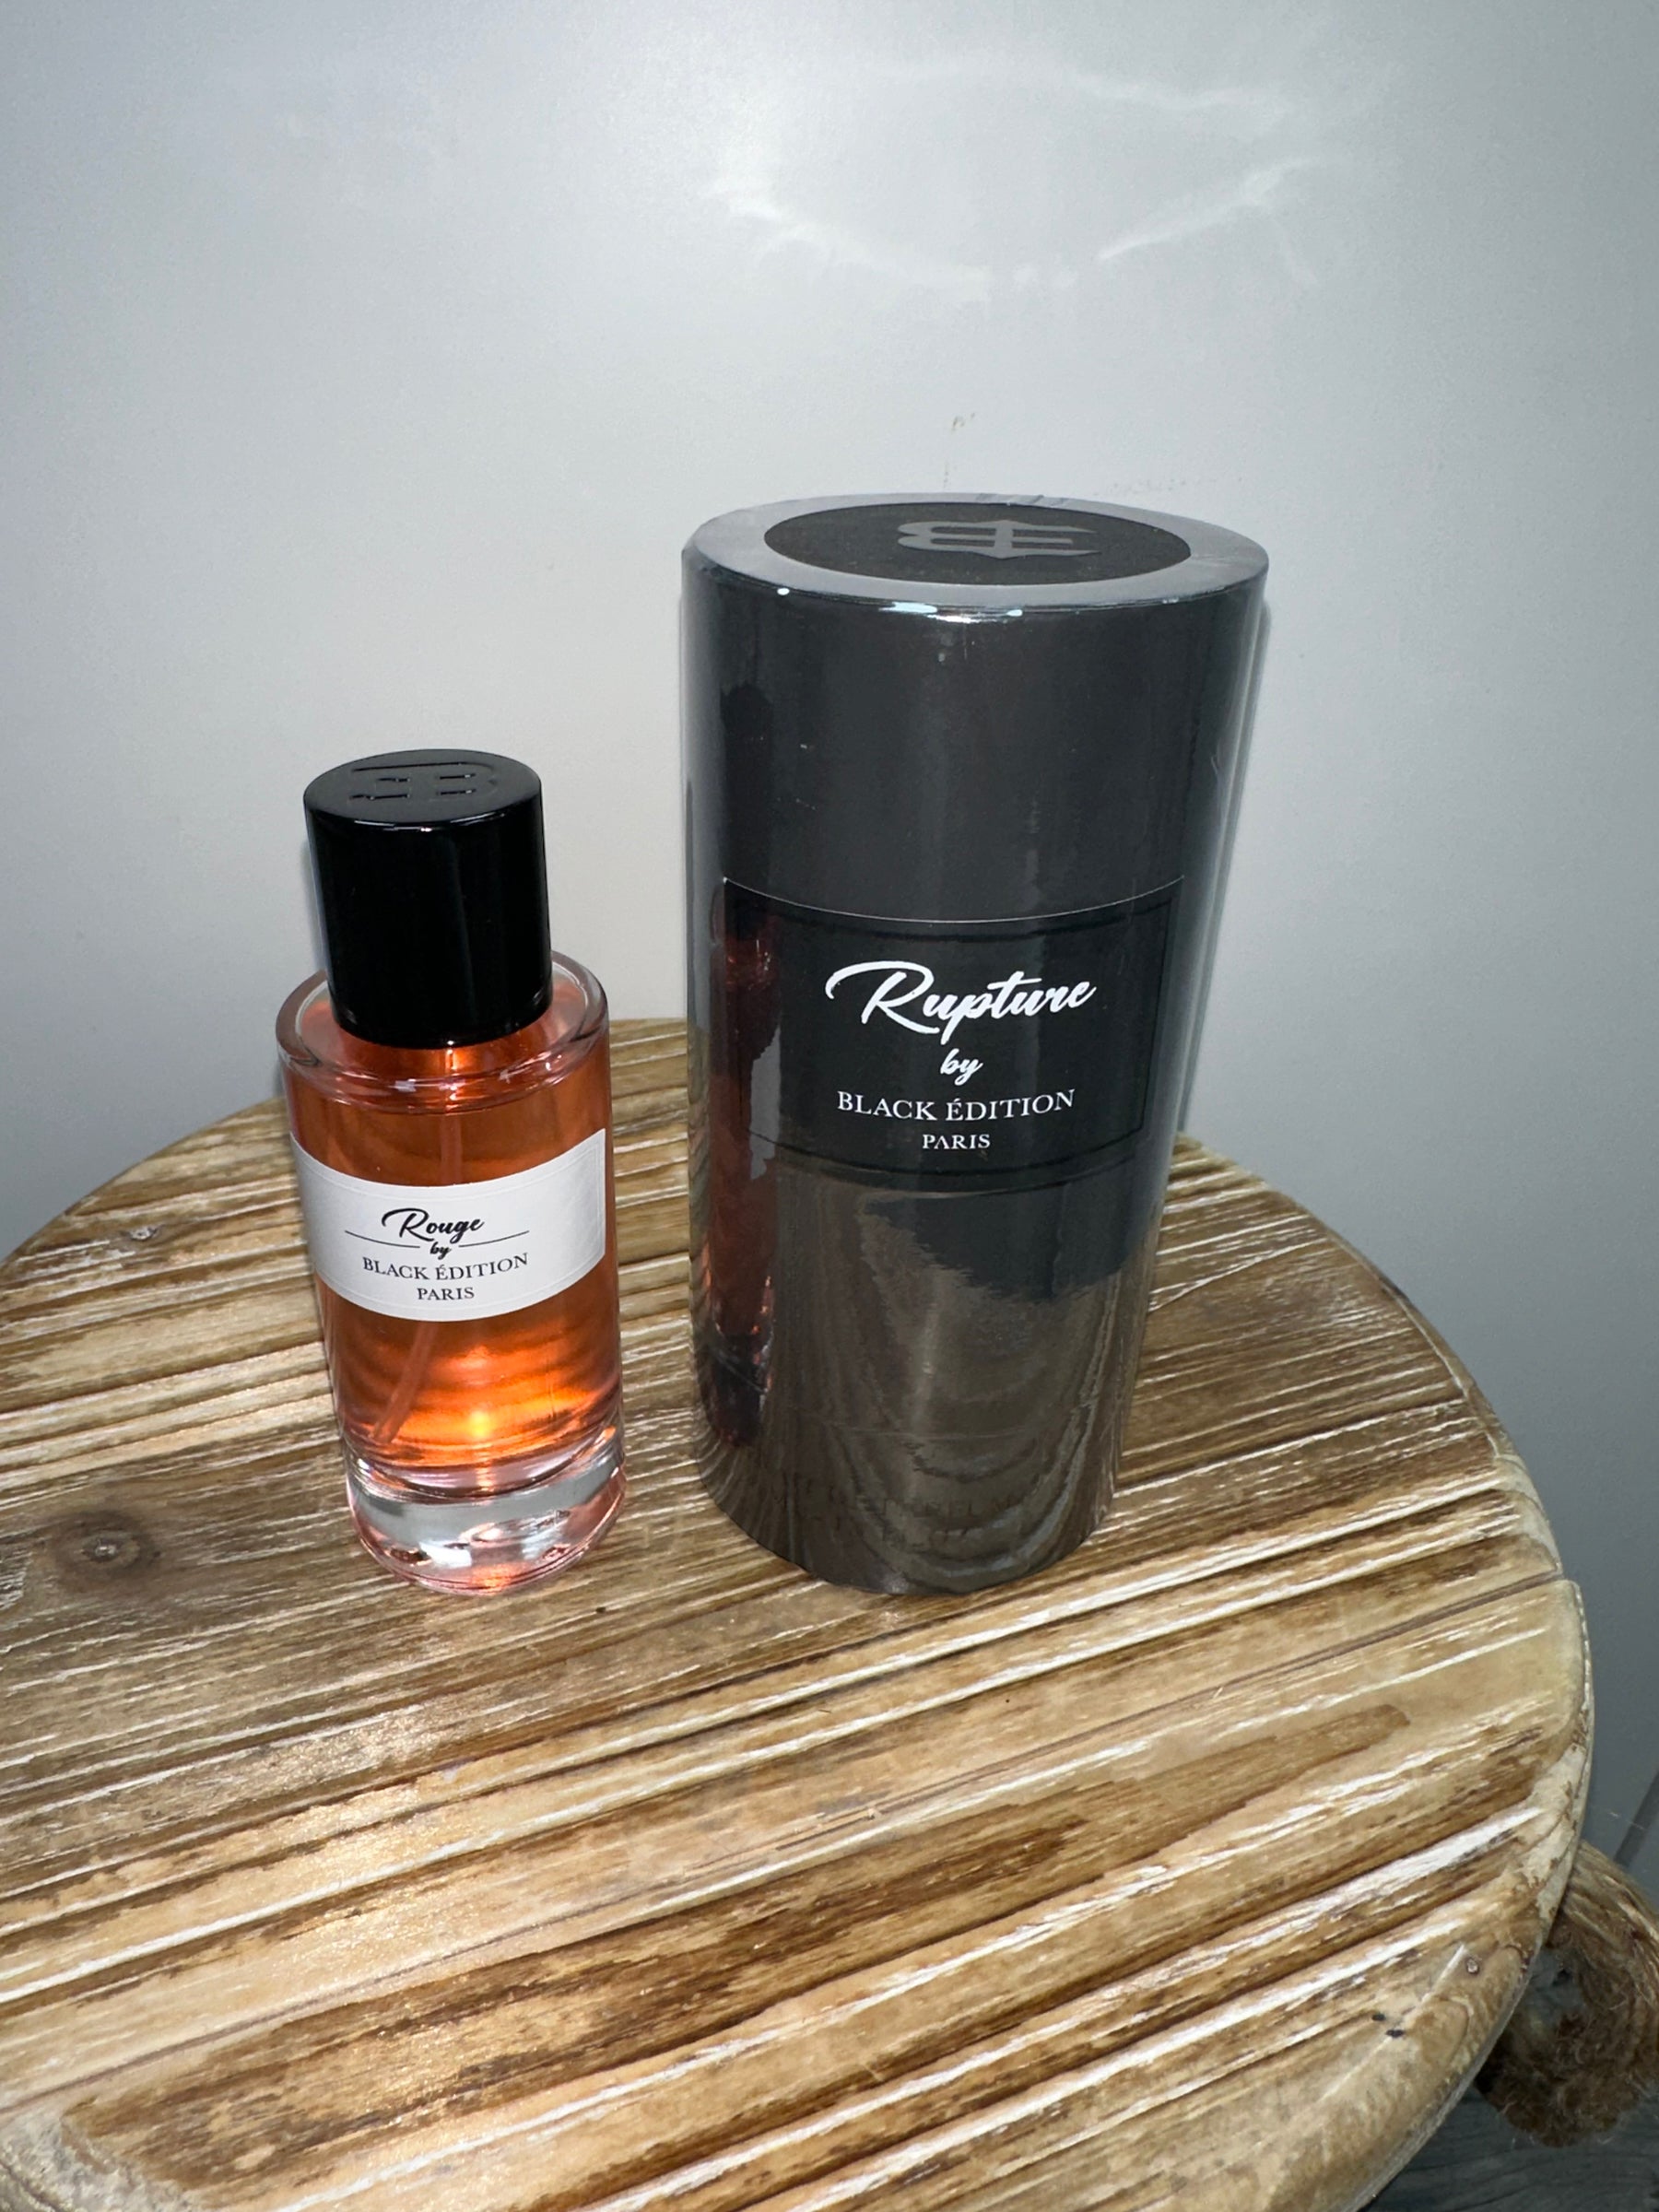 Black Edition Paris - Rupture Perfume